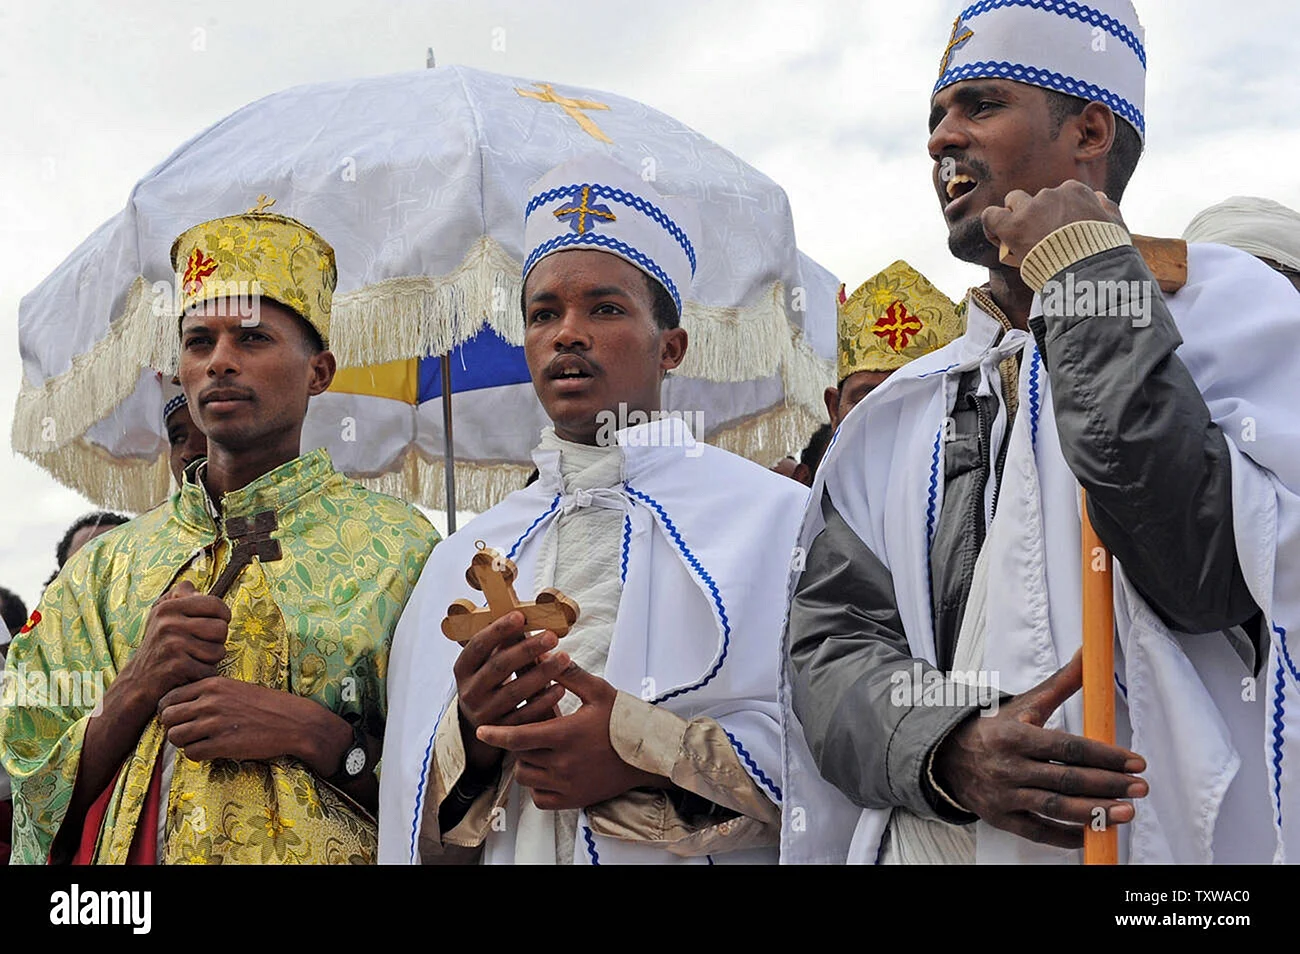 Ethiopian Christianity Wallpaper